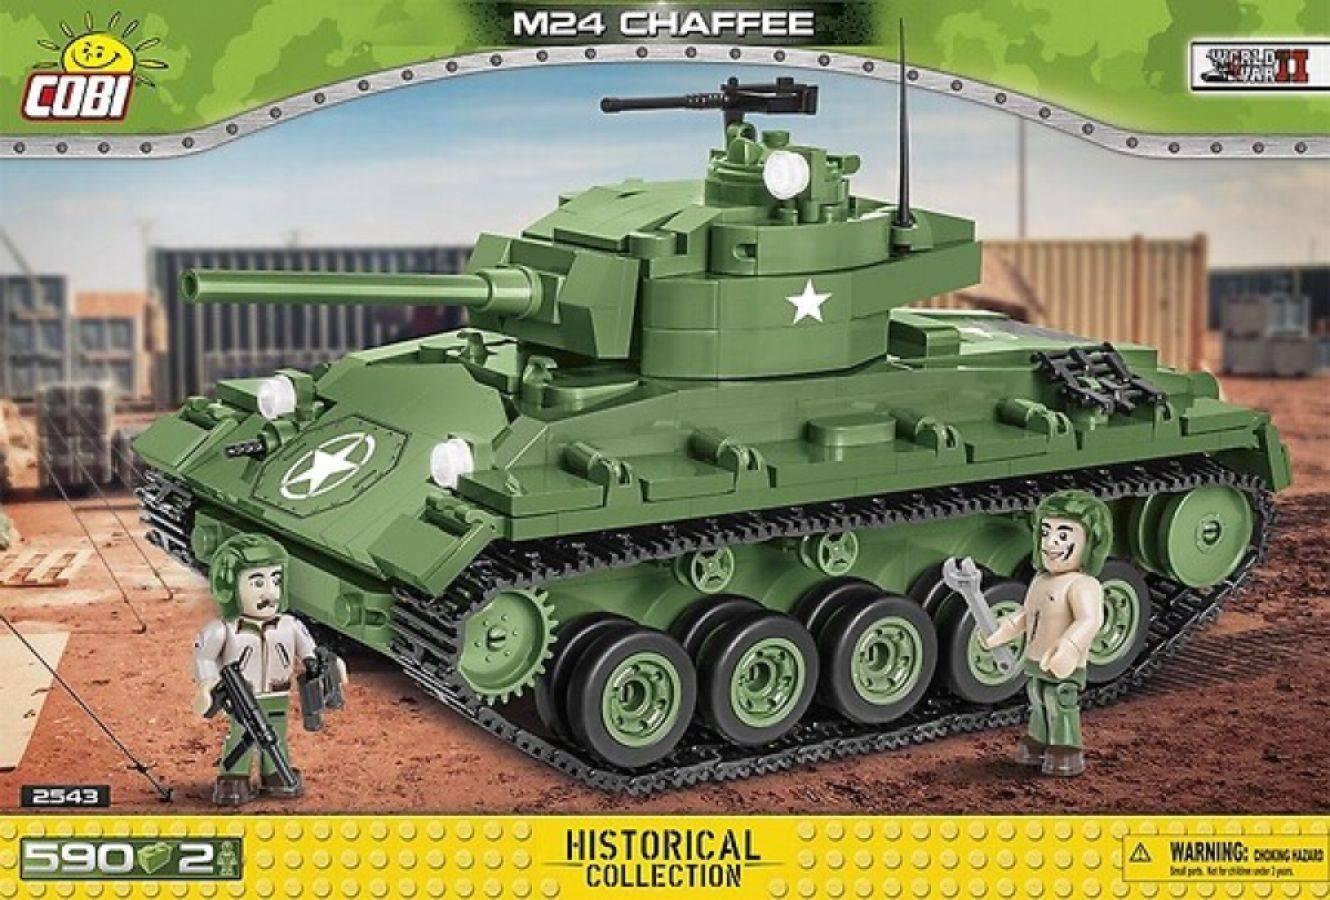 COB2543 World War II - M24 Chaffee Tank 588 pieces - Cobi - Titan Pop Culture